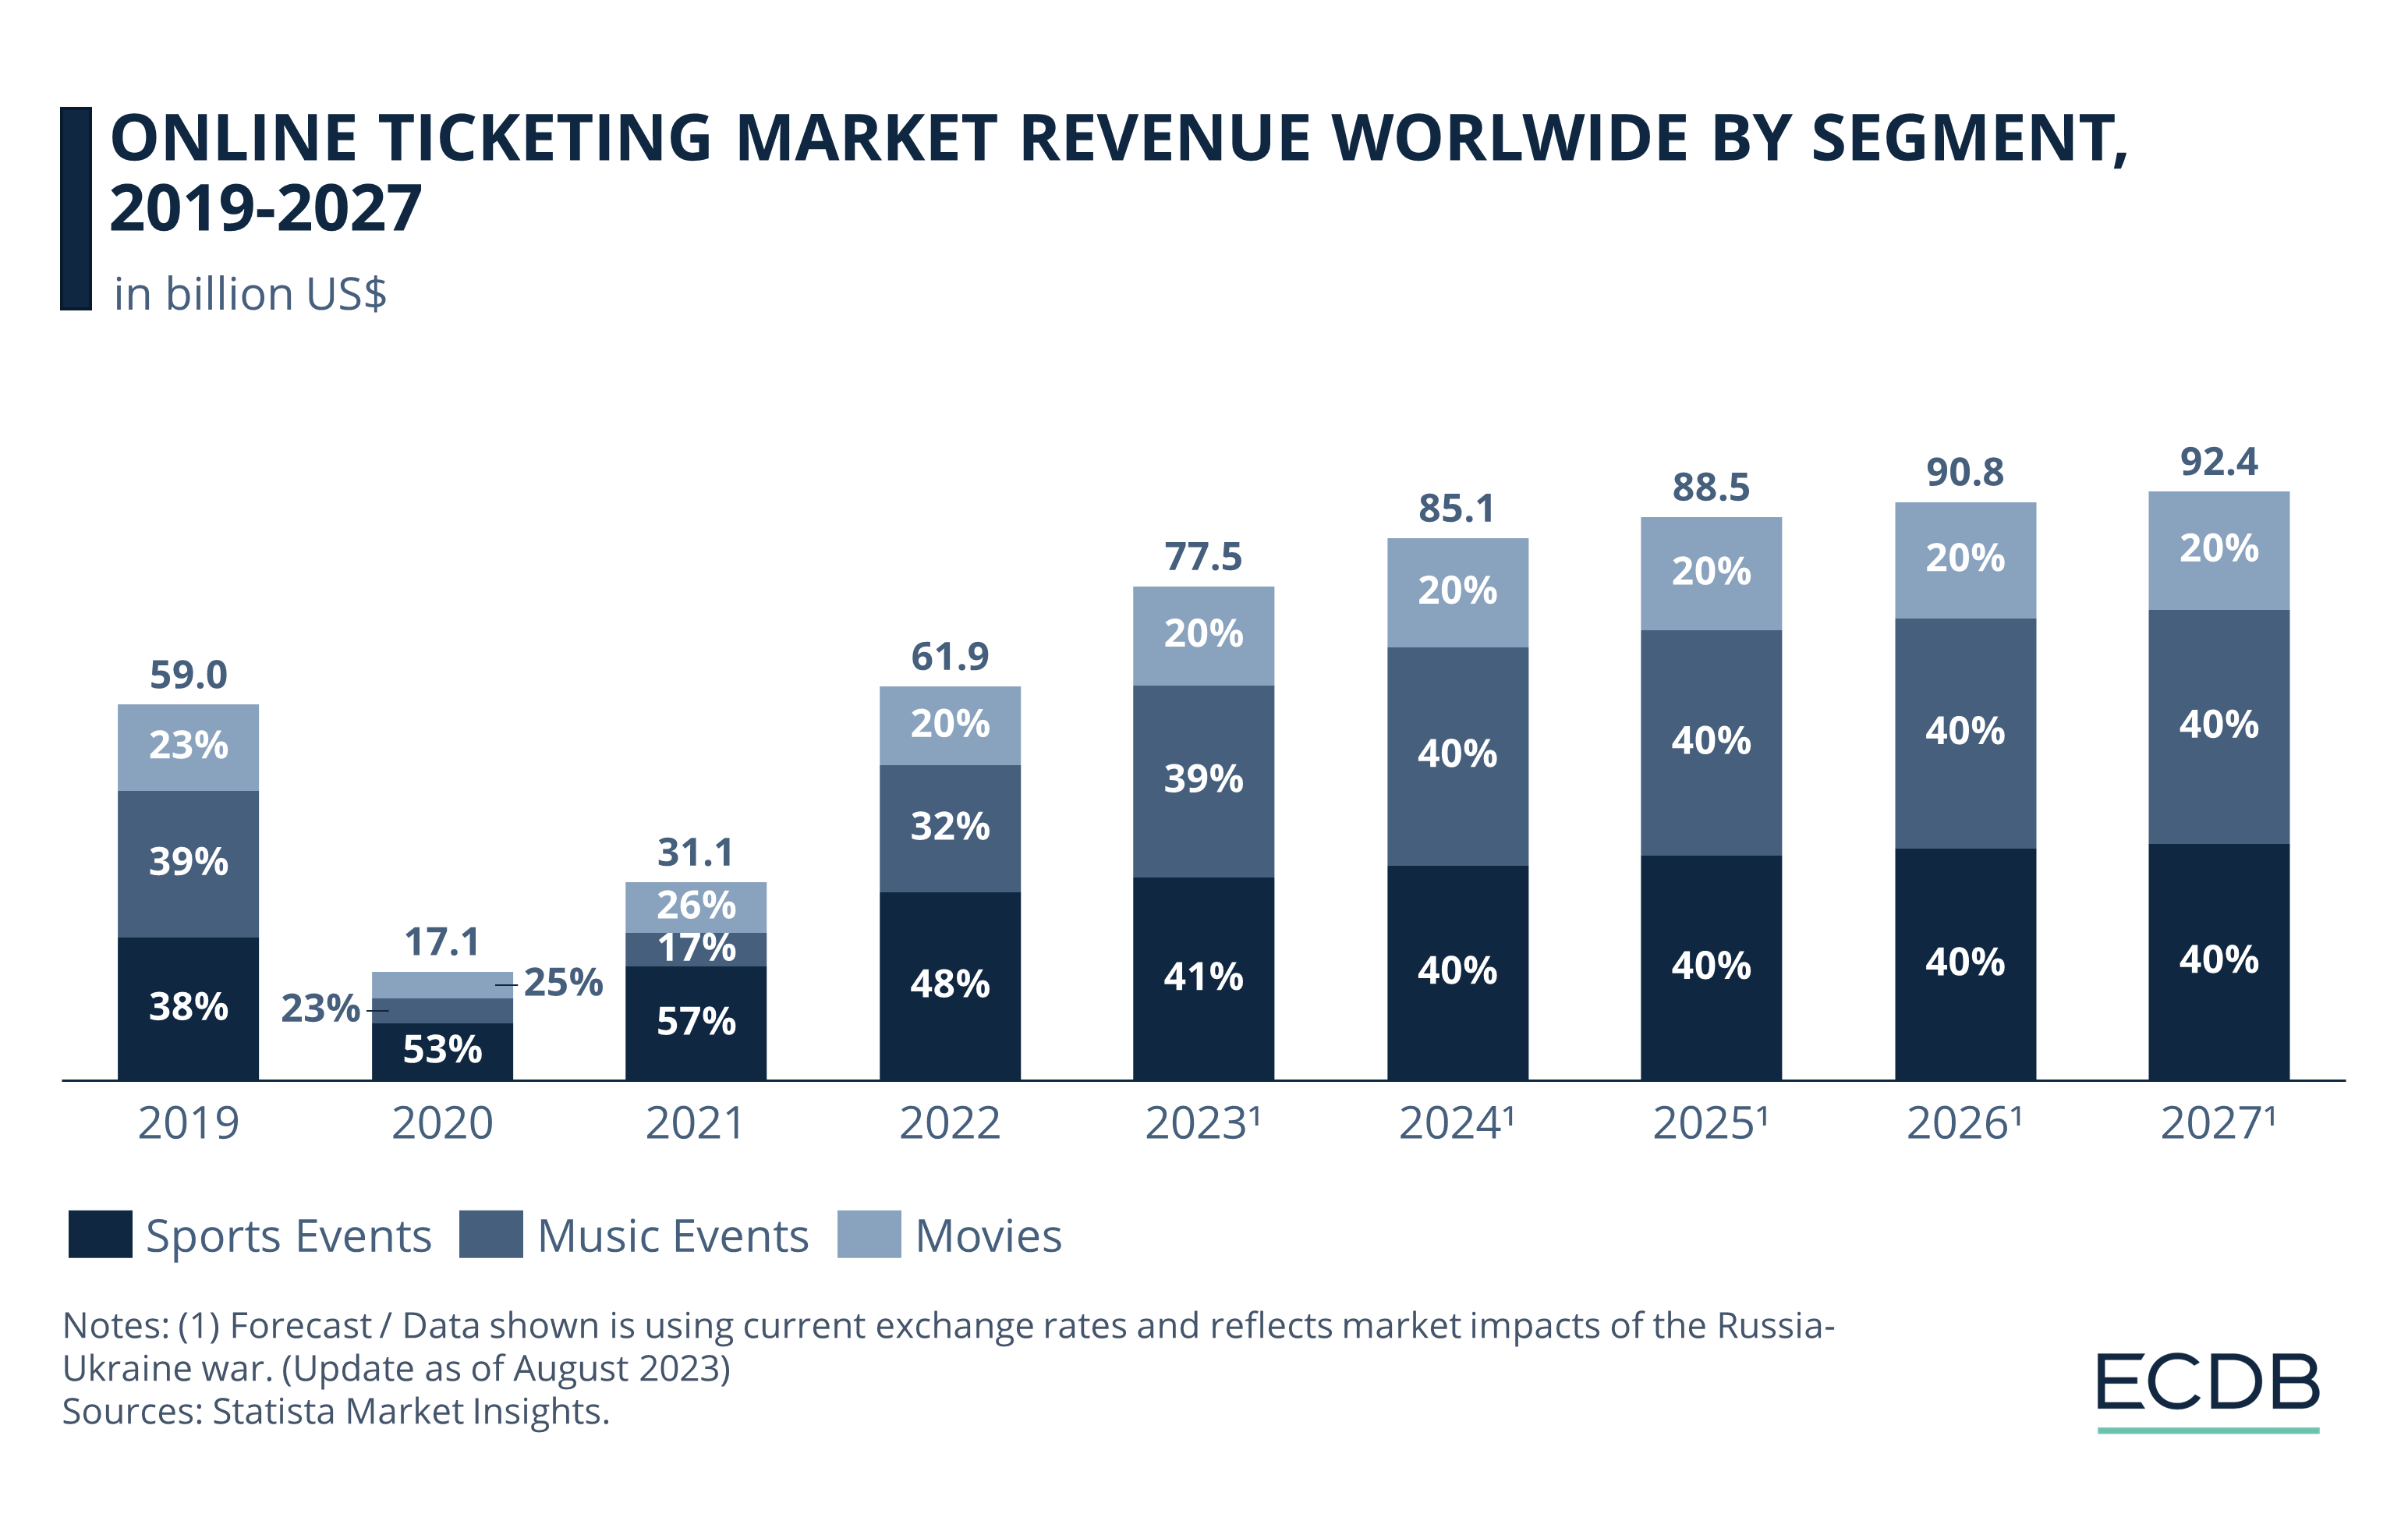 Online Ticketing Market Revenue Worldwide by Segment, 2019-2027